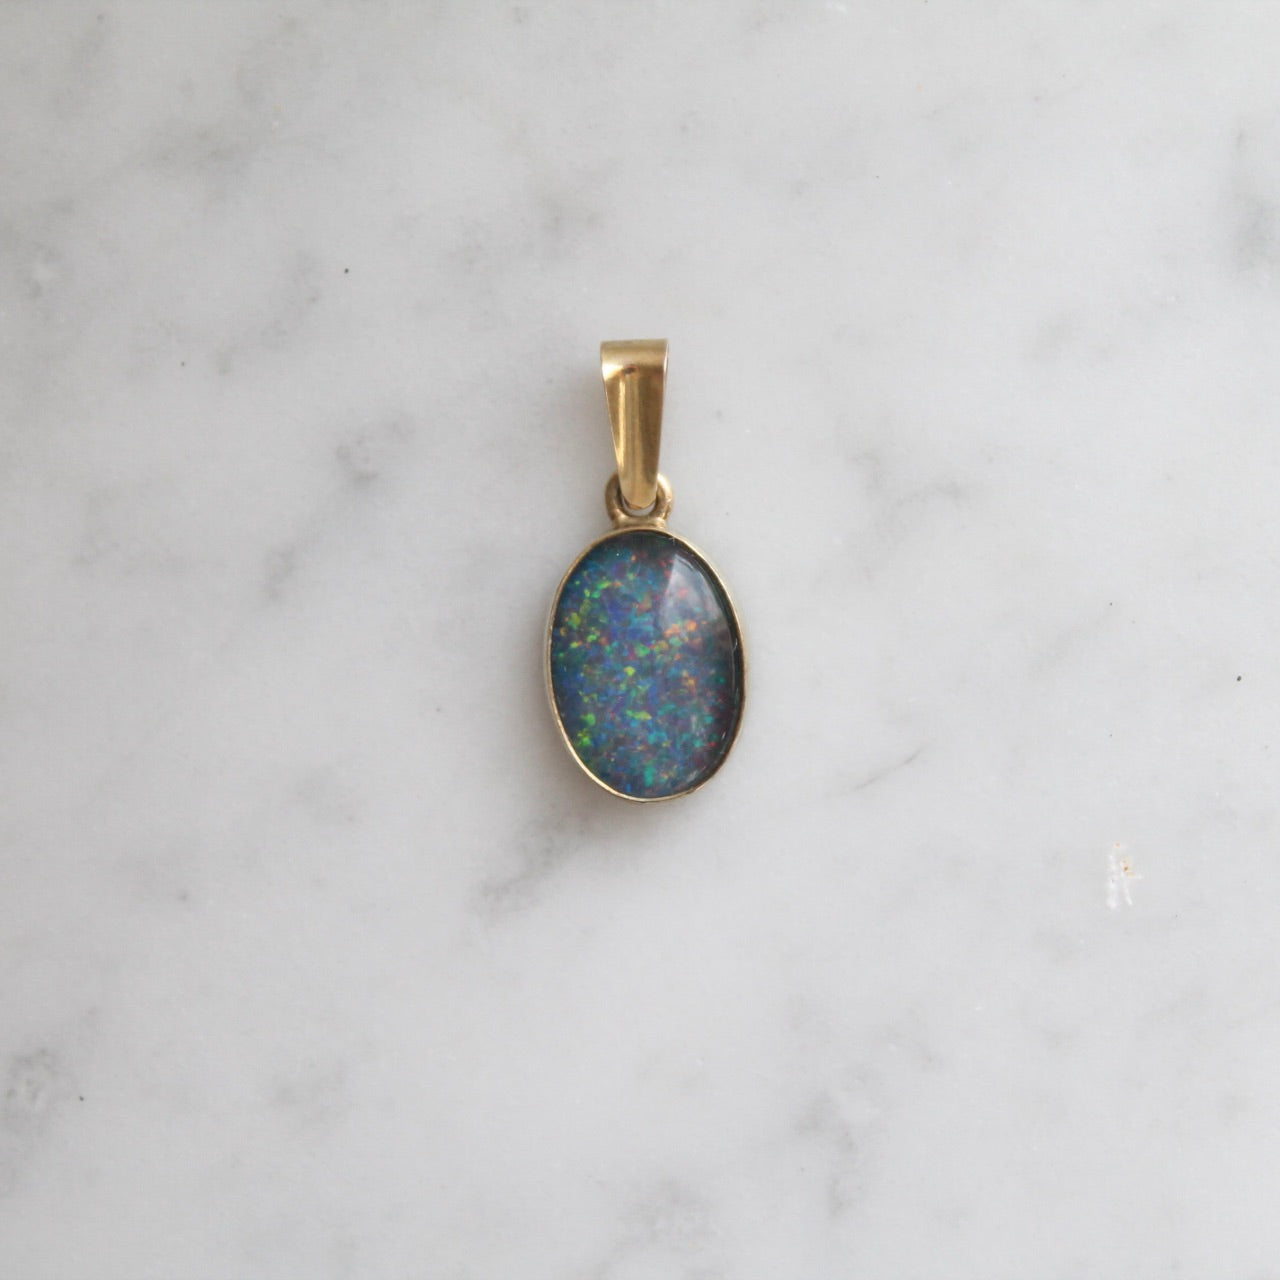 Mesmerizing Blue Opal Pendant